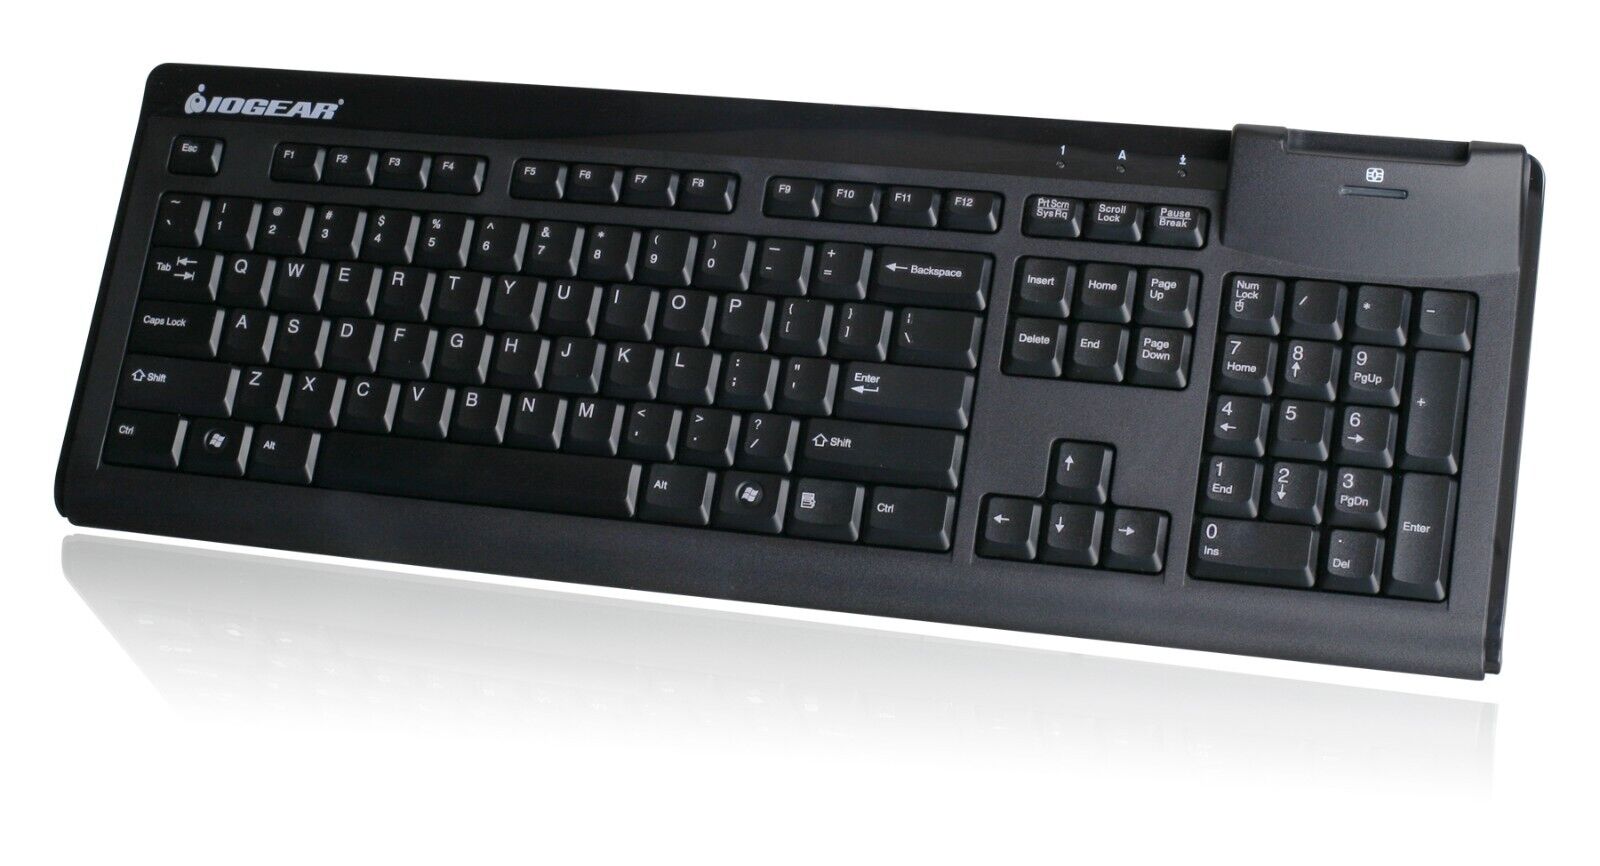 IOGEAR Keyboard with Built in Card Reader GKBSR201- New